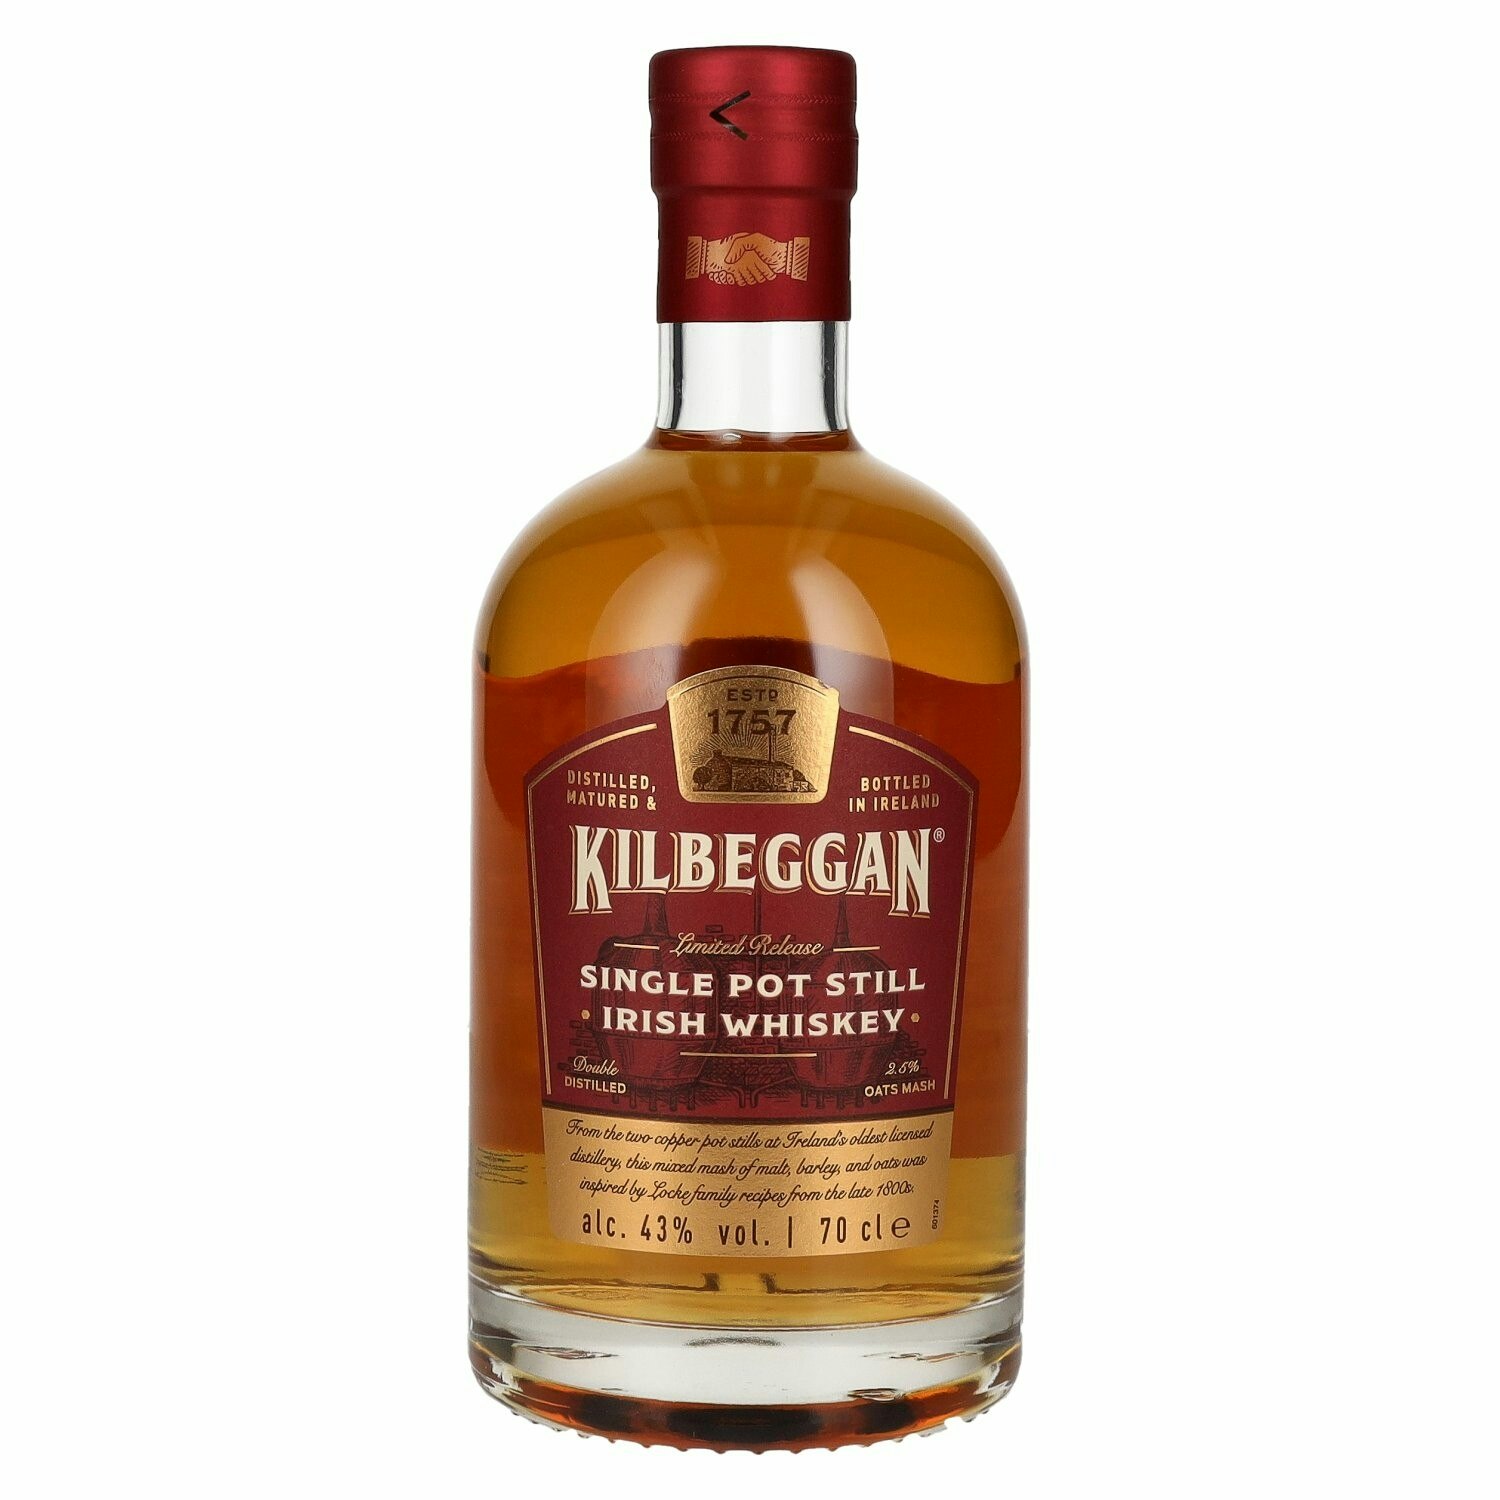 Kilbeggan SINGLE POT STILL Irish Whiskey 43% Vol. 0,7l